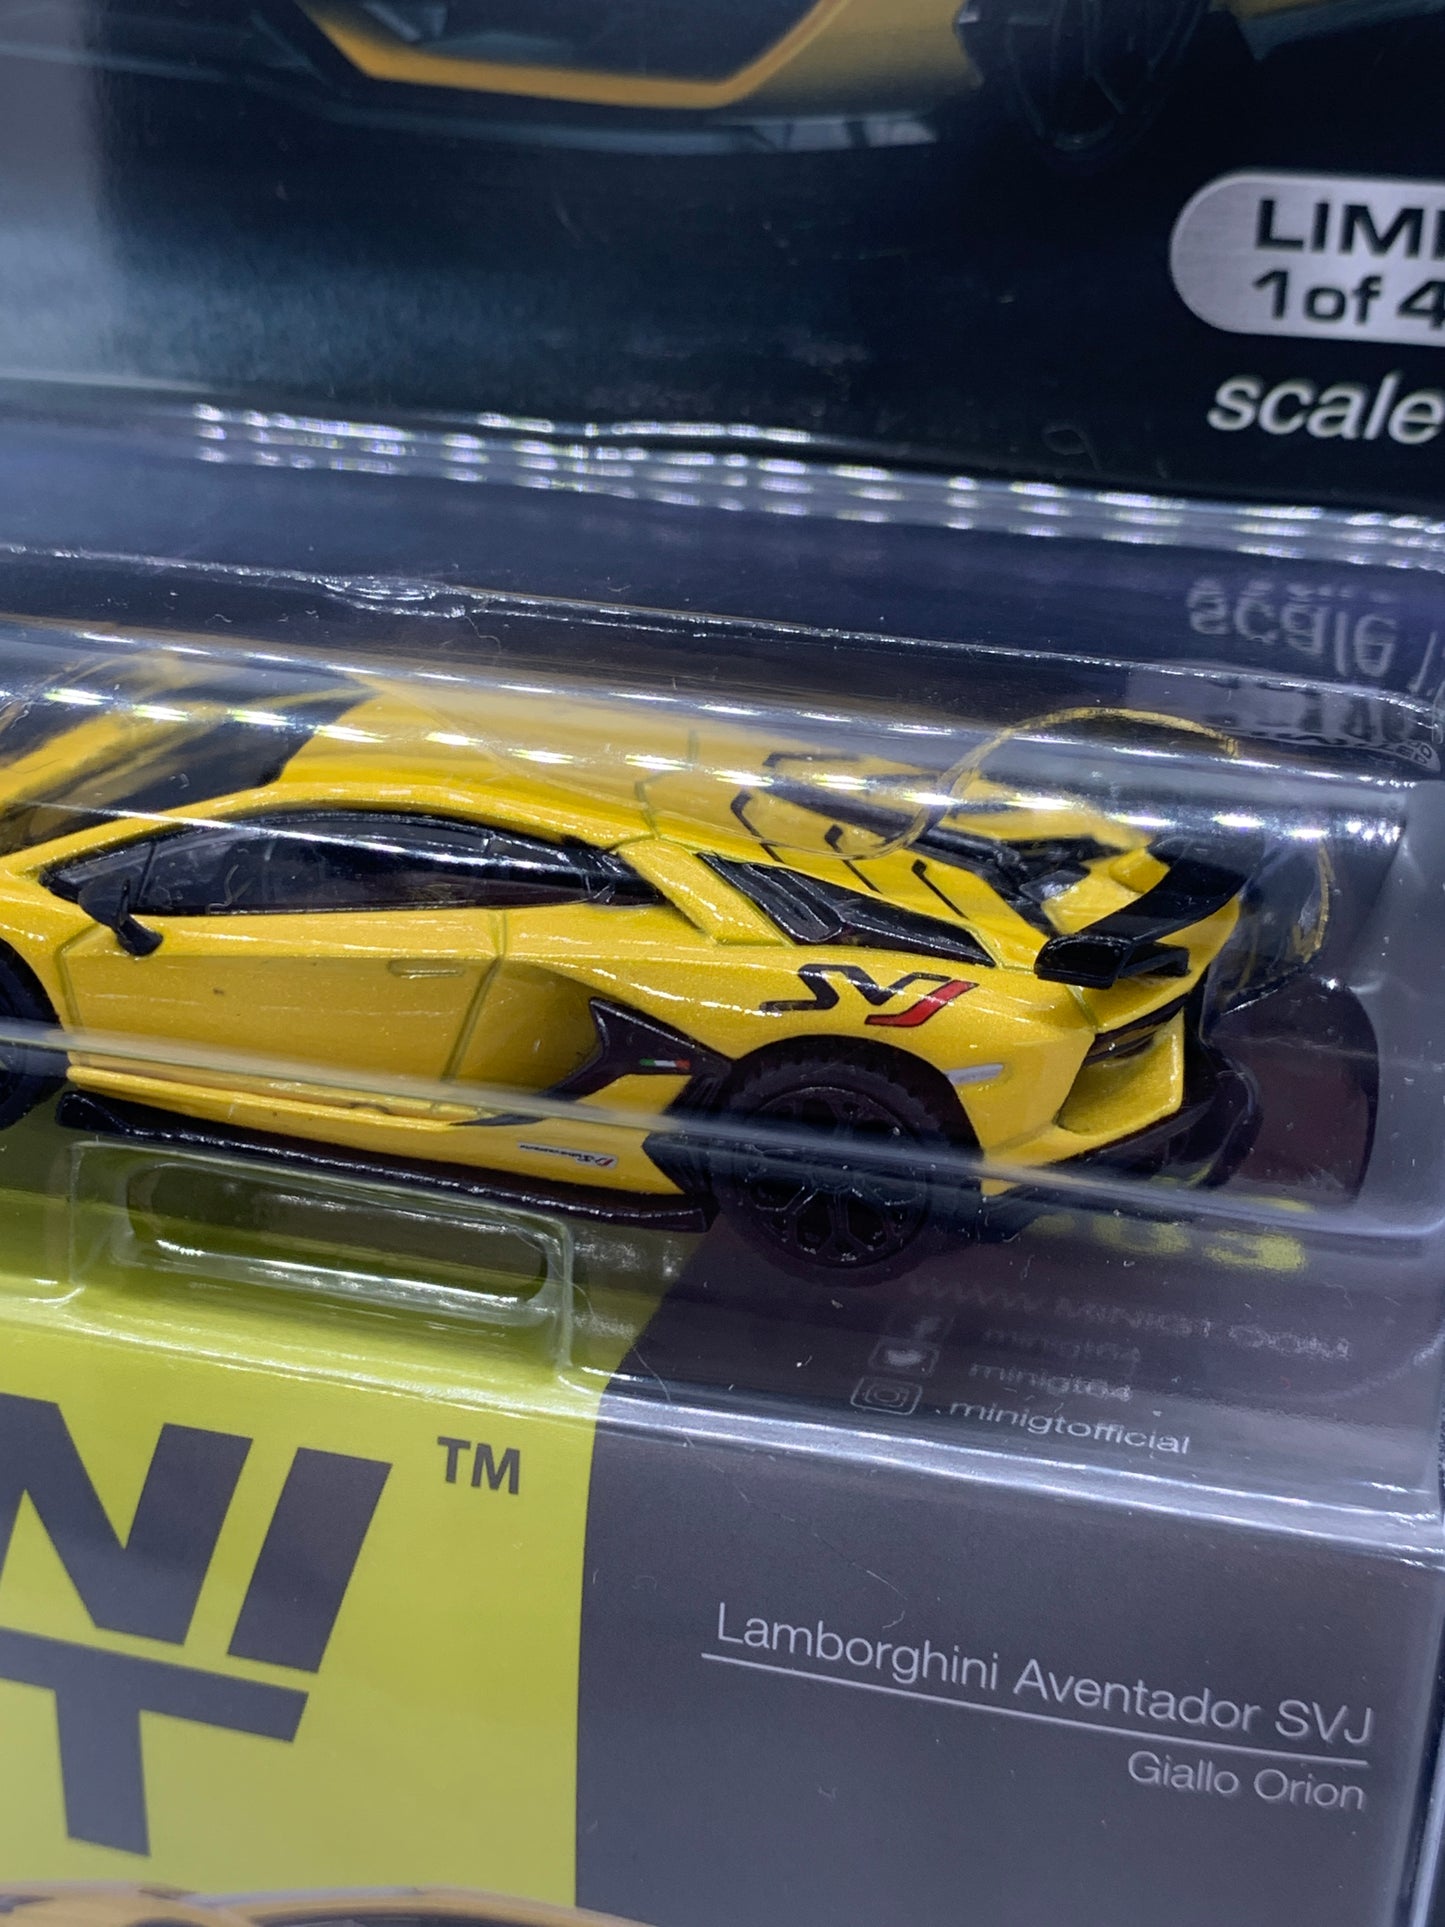 MINI GT - Lamborghini Aventador SVJ Giallo Orion - Display Blister Packaging